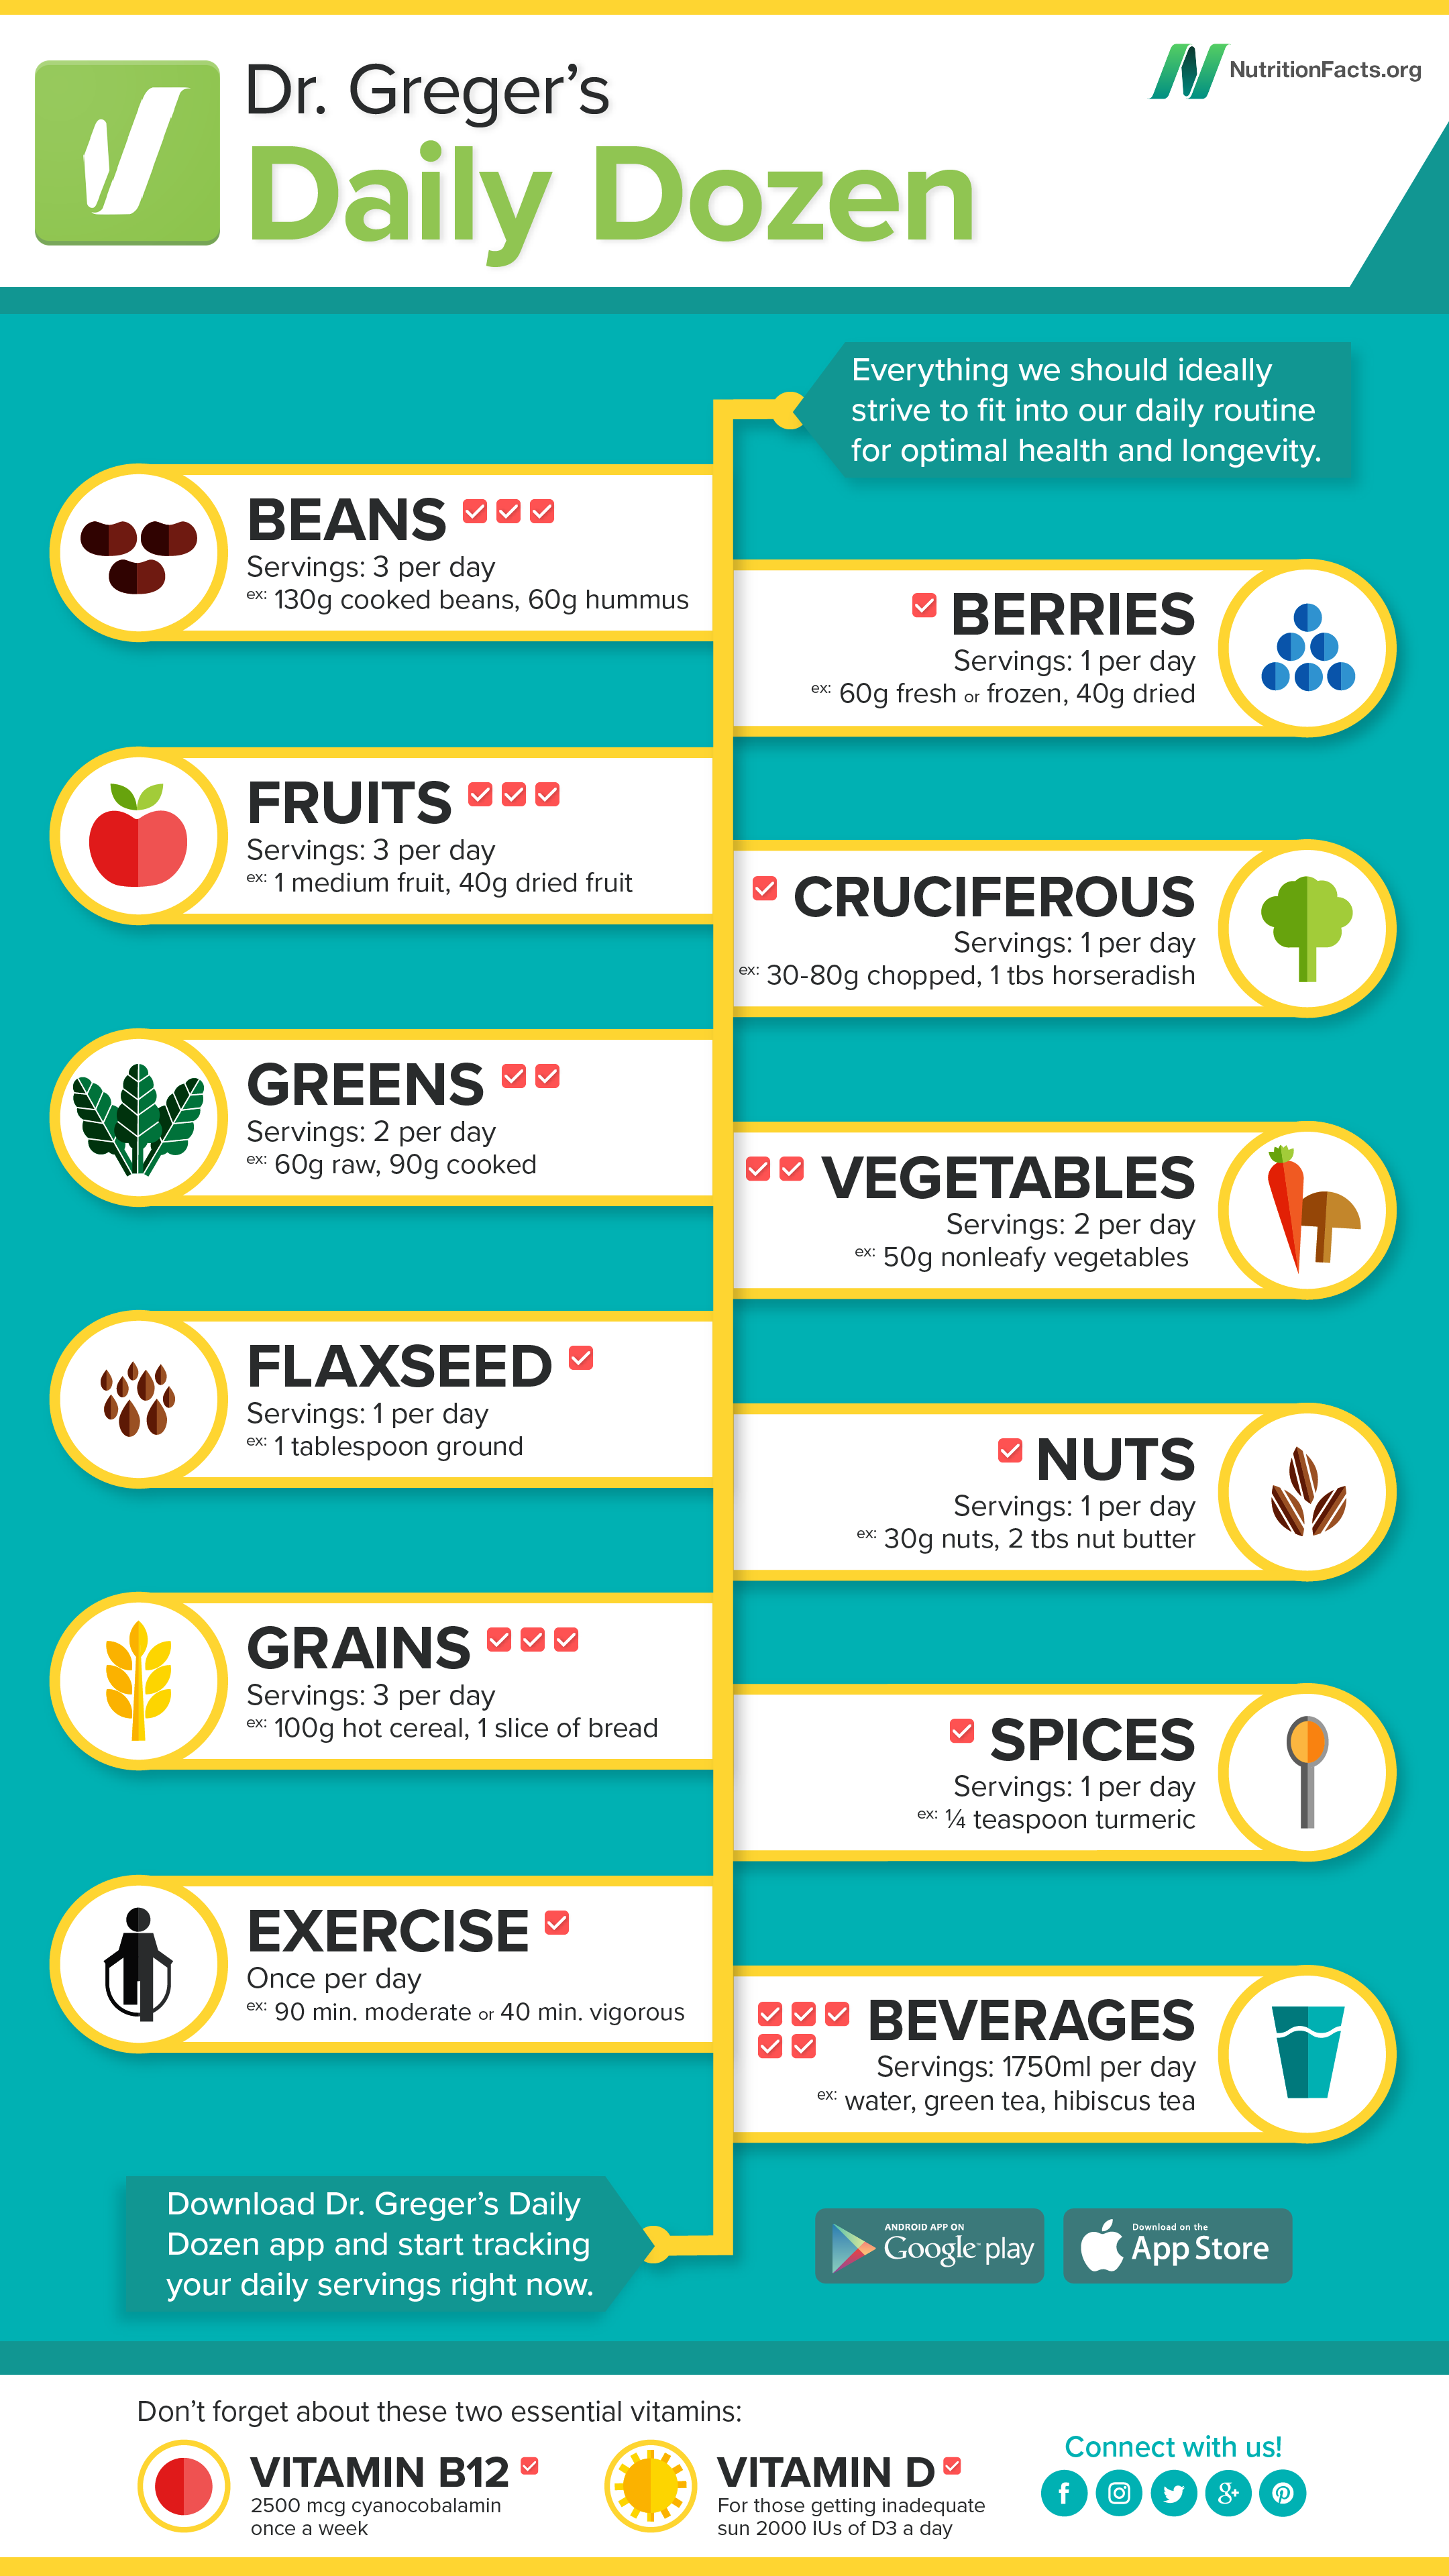 Daily Dozen Challenge | NutritionFacts.org